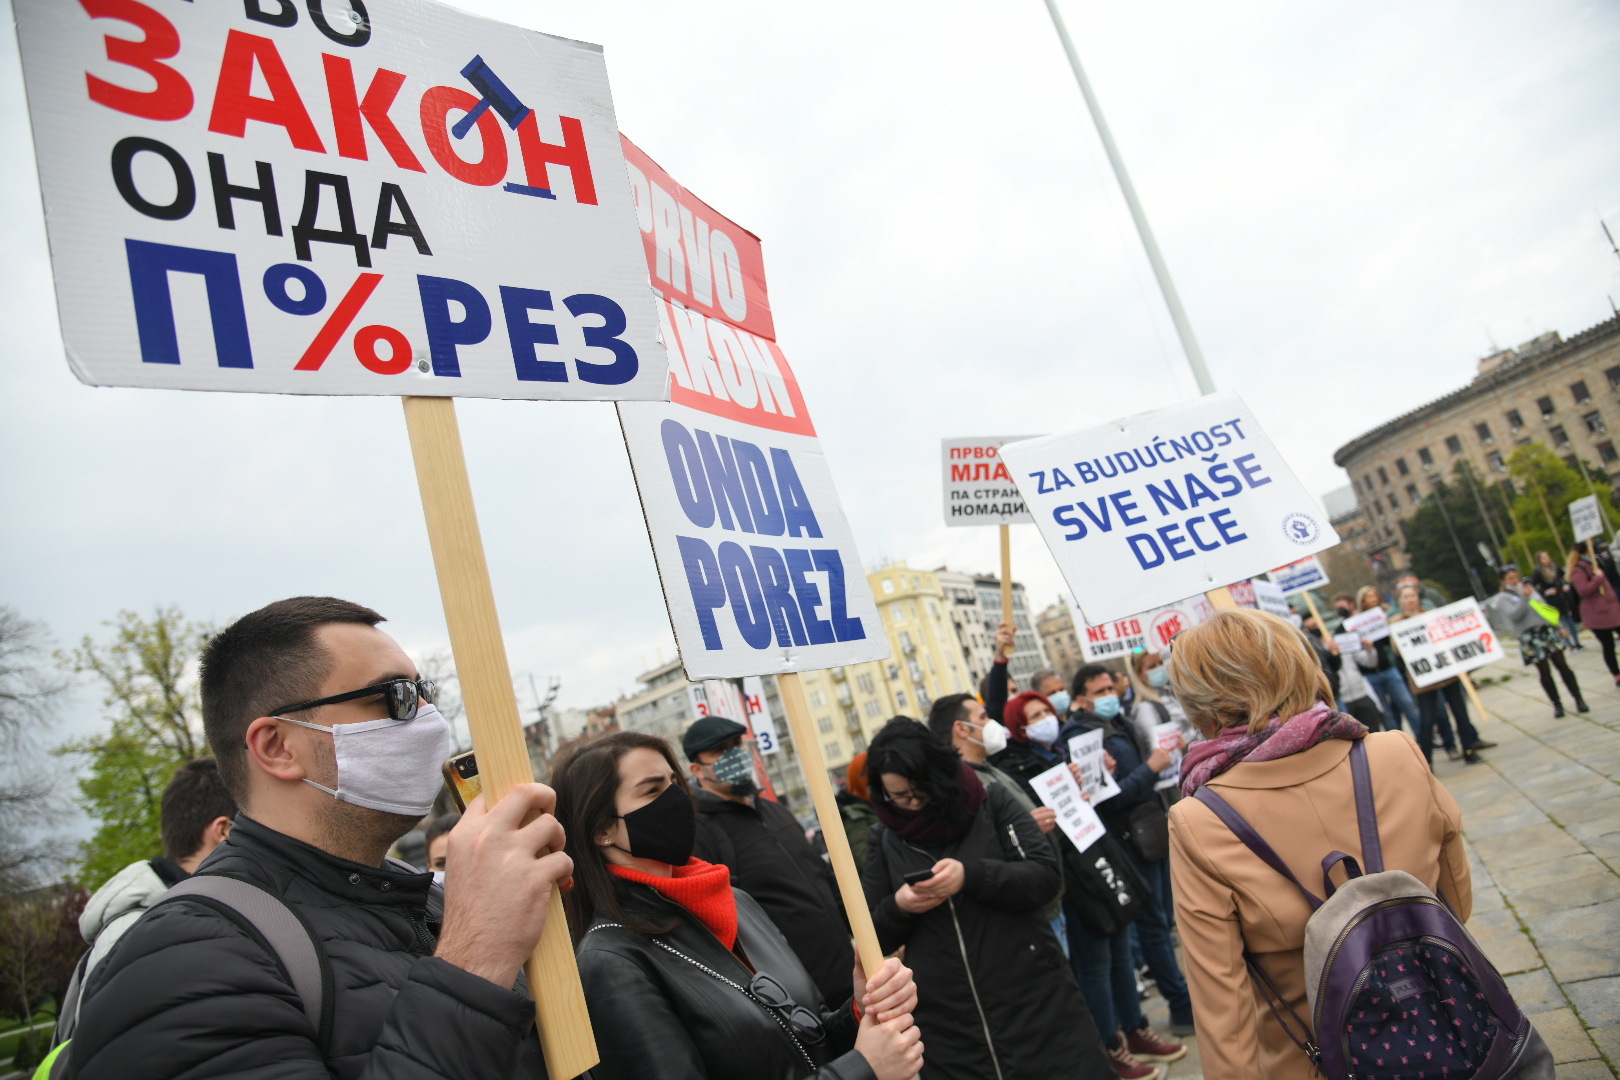 Frilenseri ispred Skupstine Srbije, protest